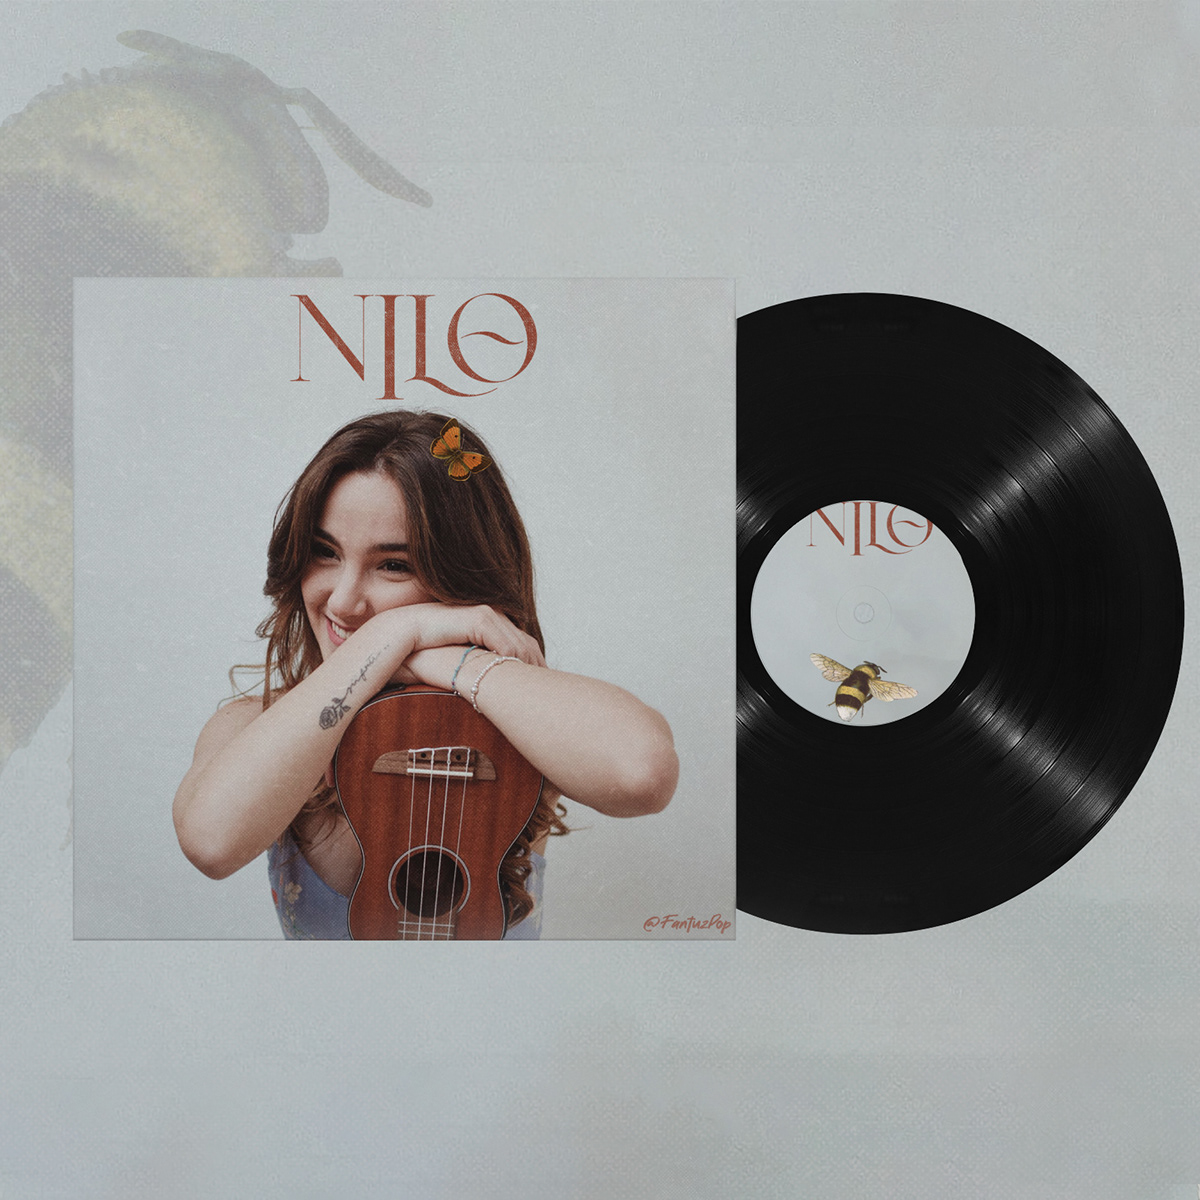 Album cd cover maria nilo mille nilo Ukulele vinile